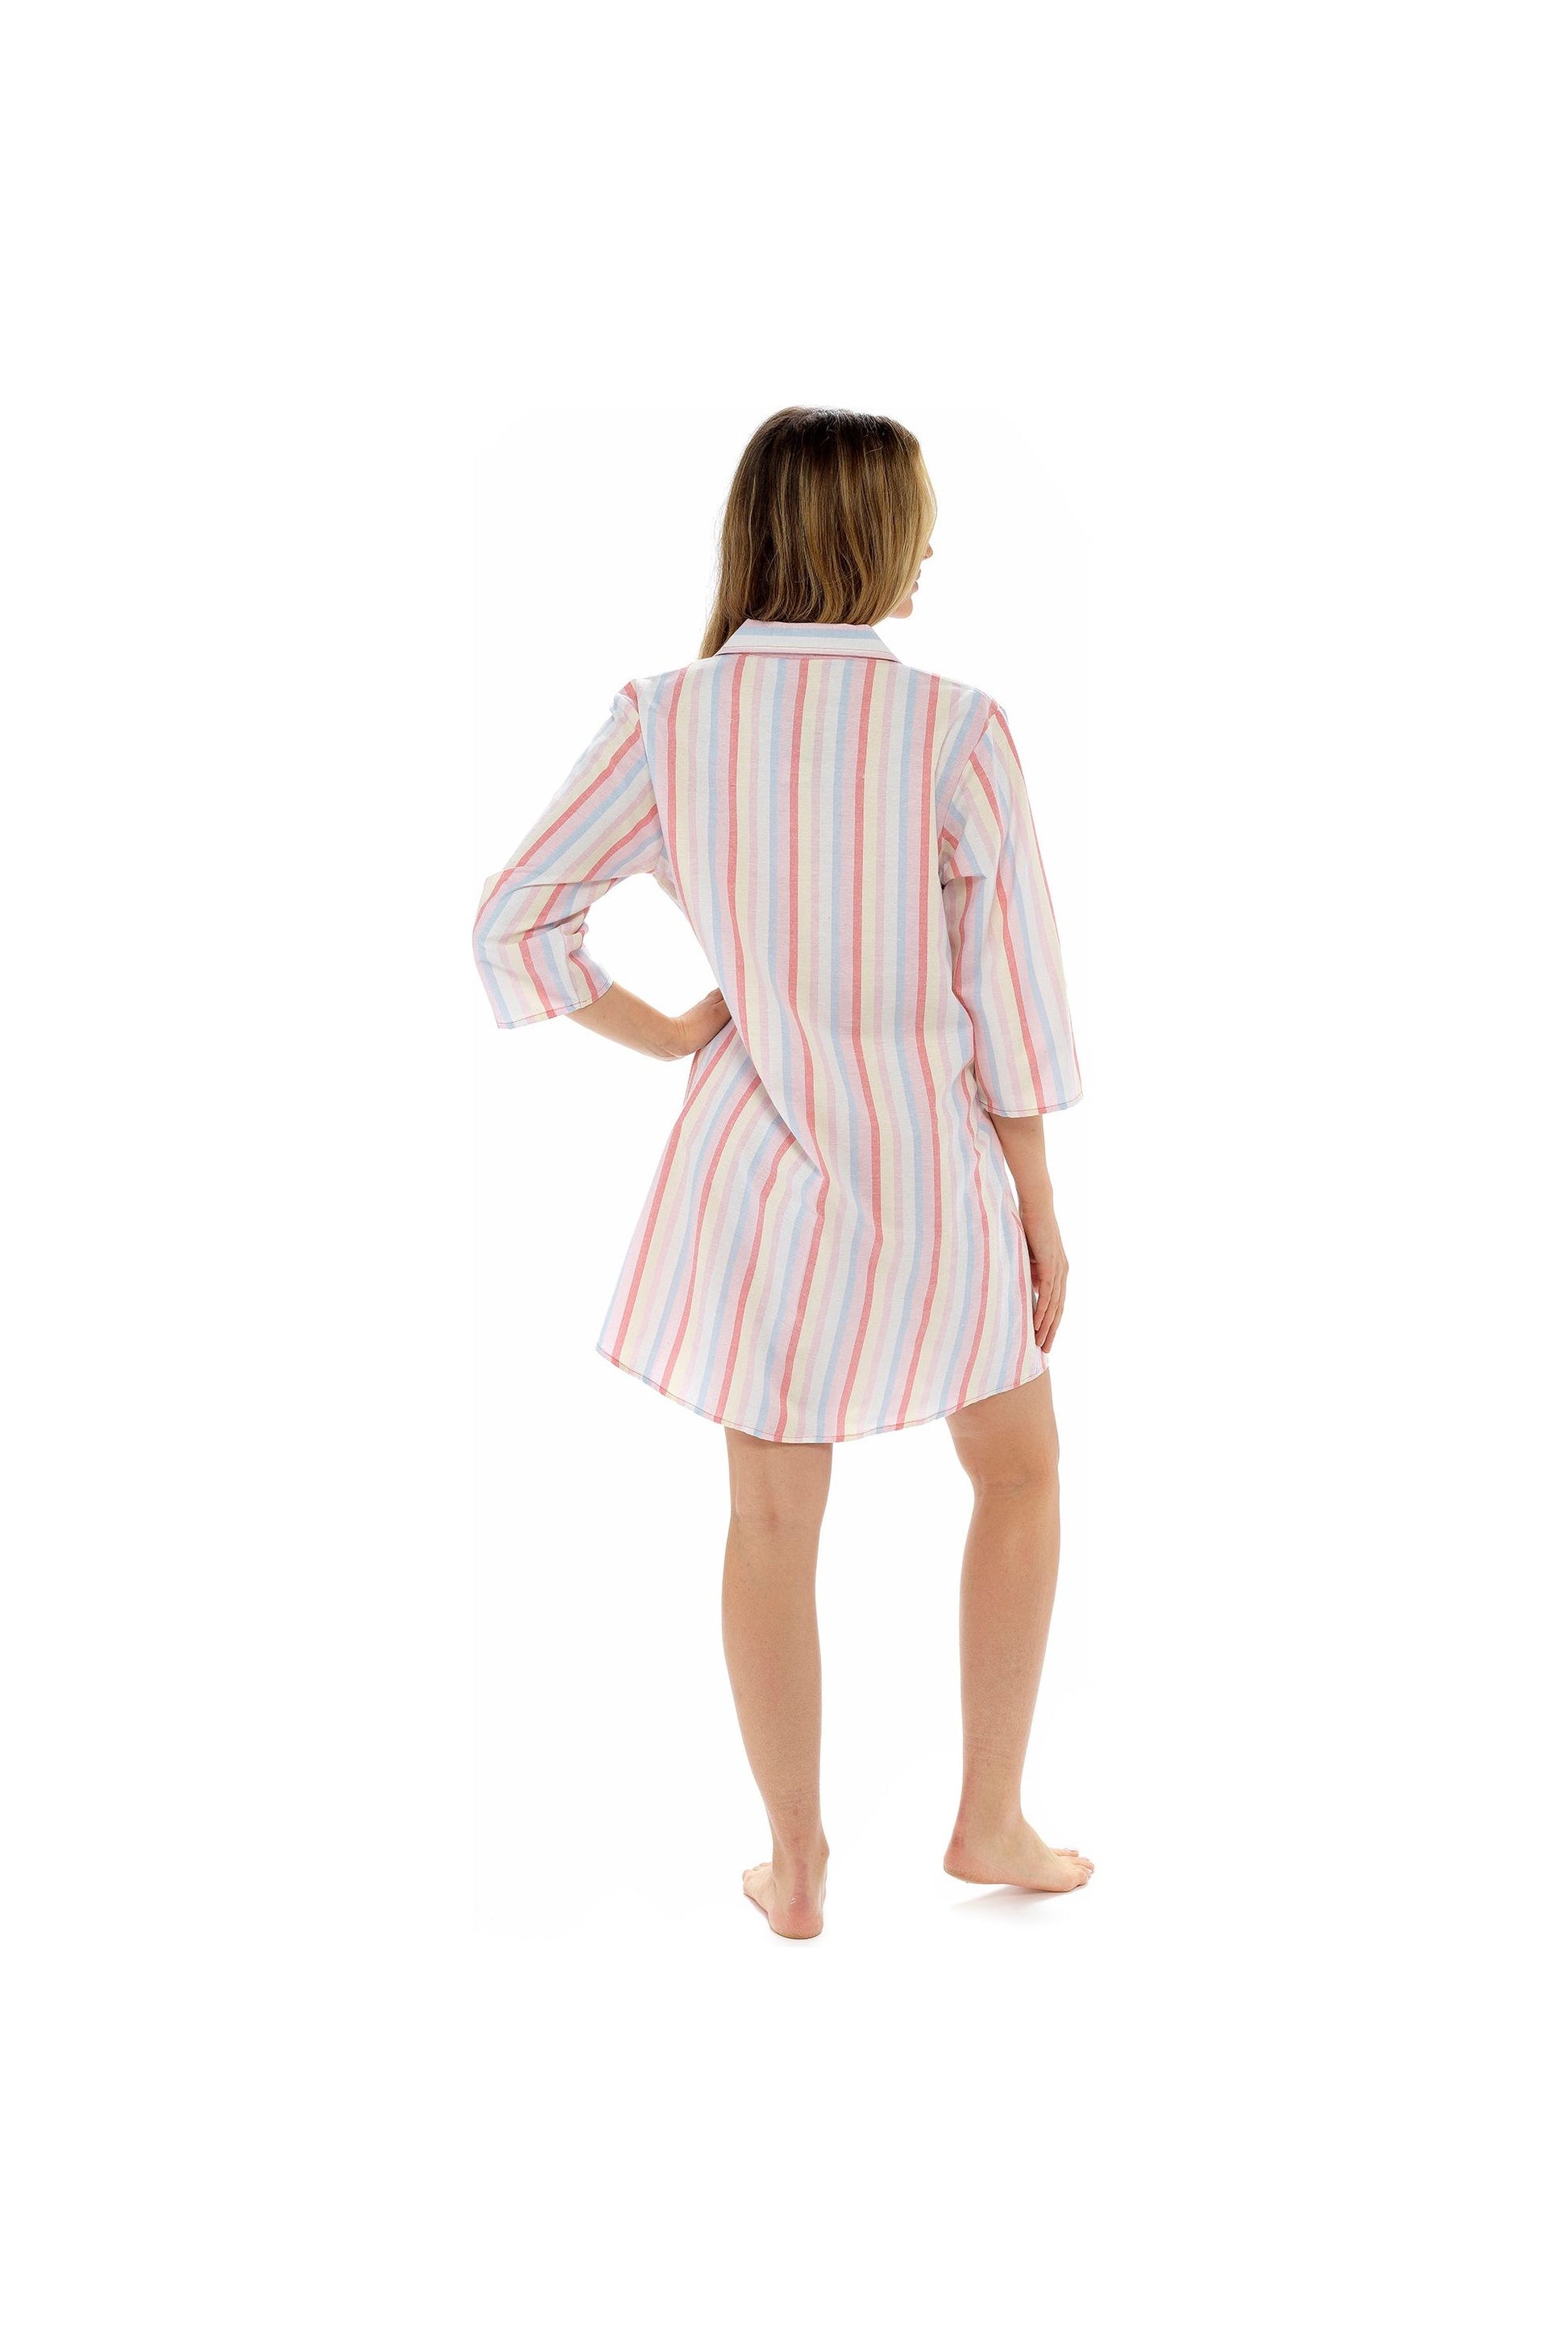 Women's Pastel Stripe Shirt Style Nightdress - Pyjamas.com